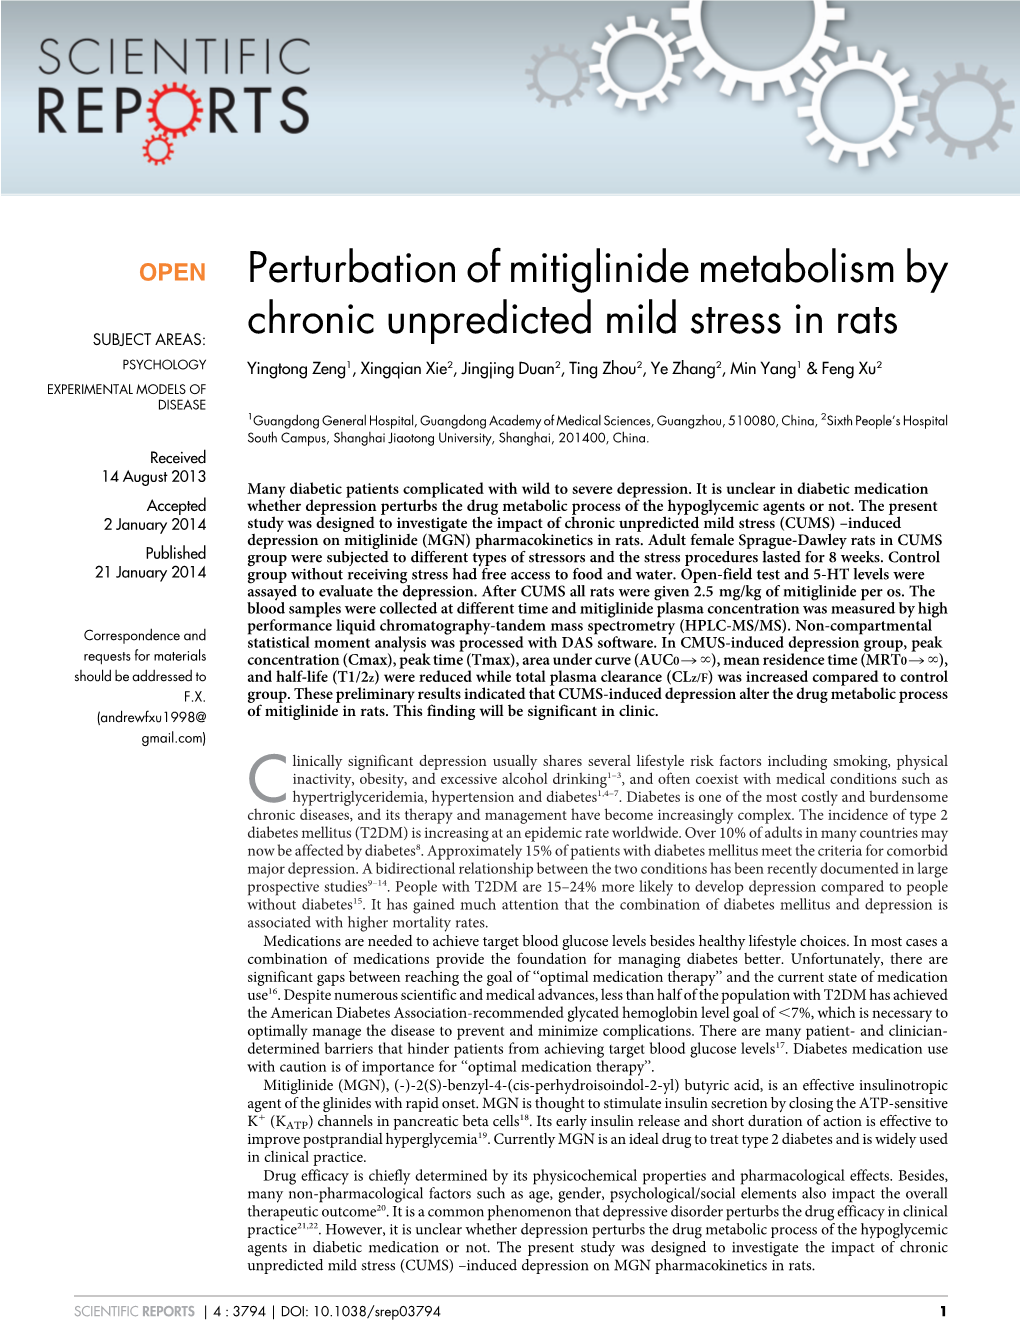 Perturbation of Mitiglinide Metabolism by Chronic Unpredicted Mild Stress